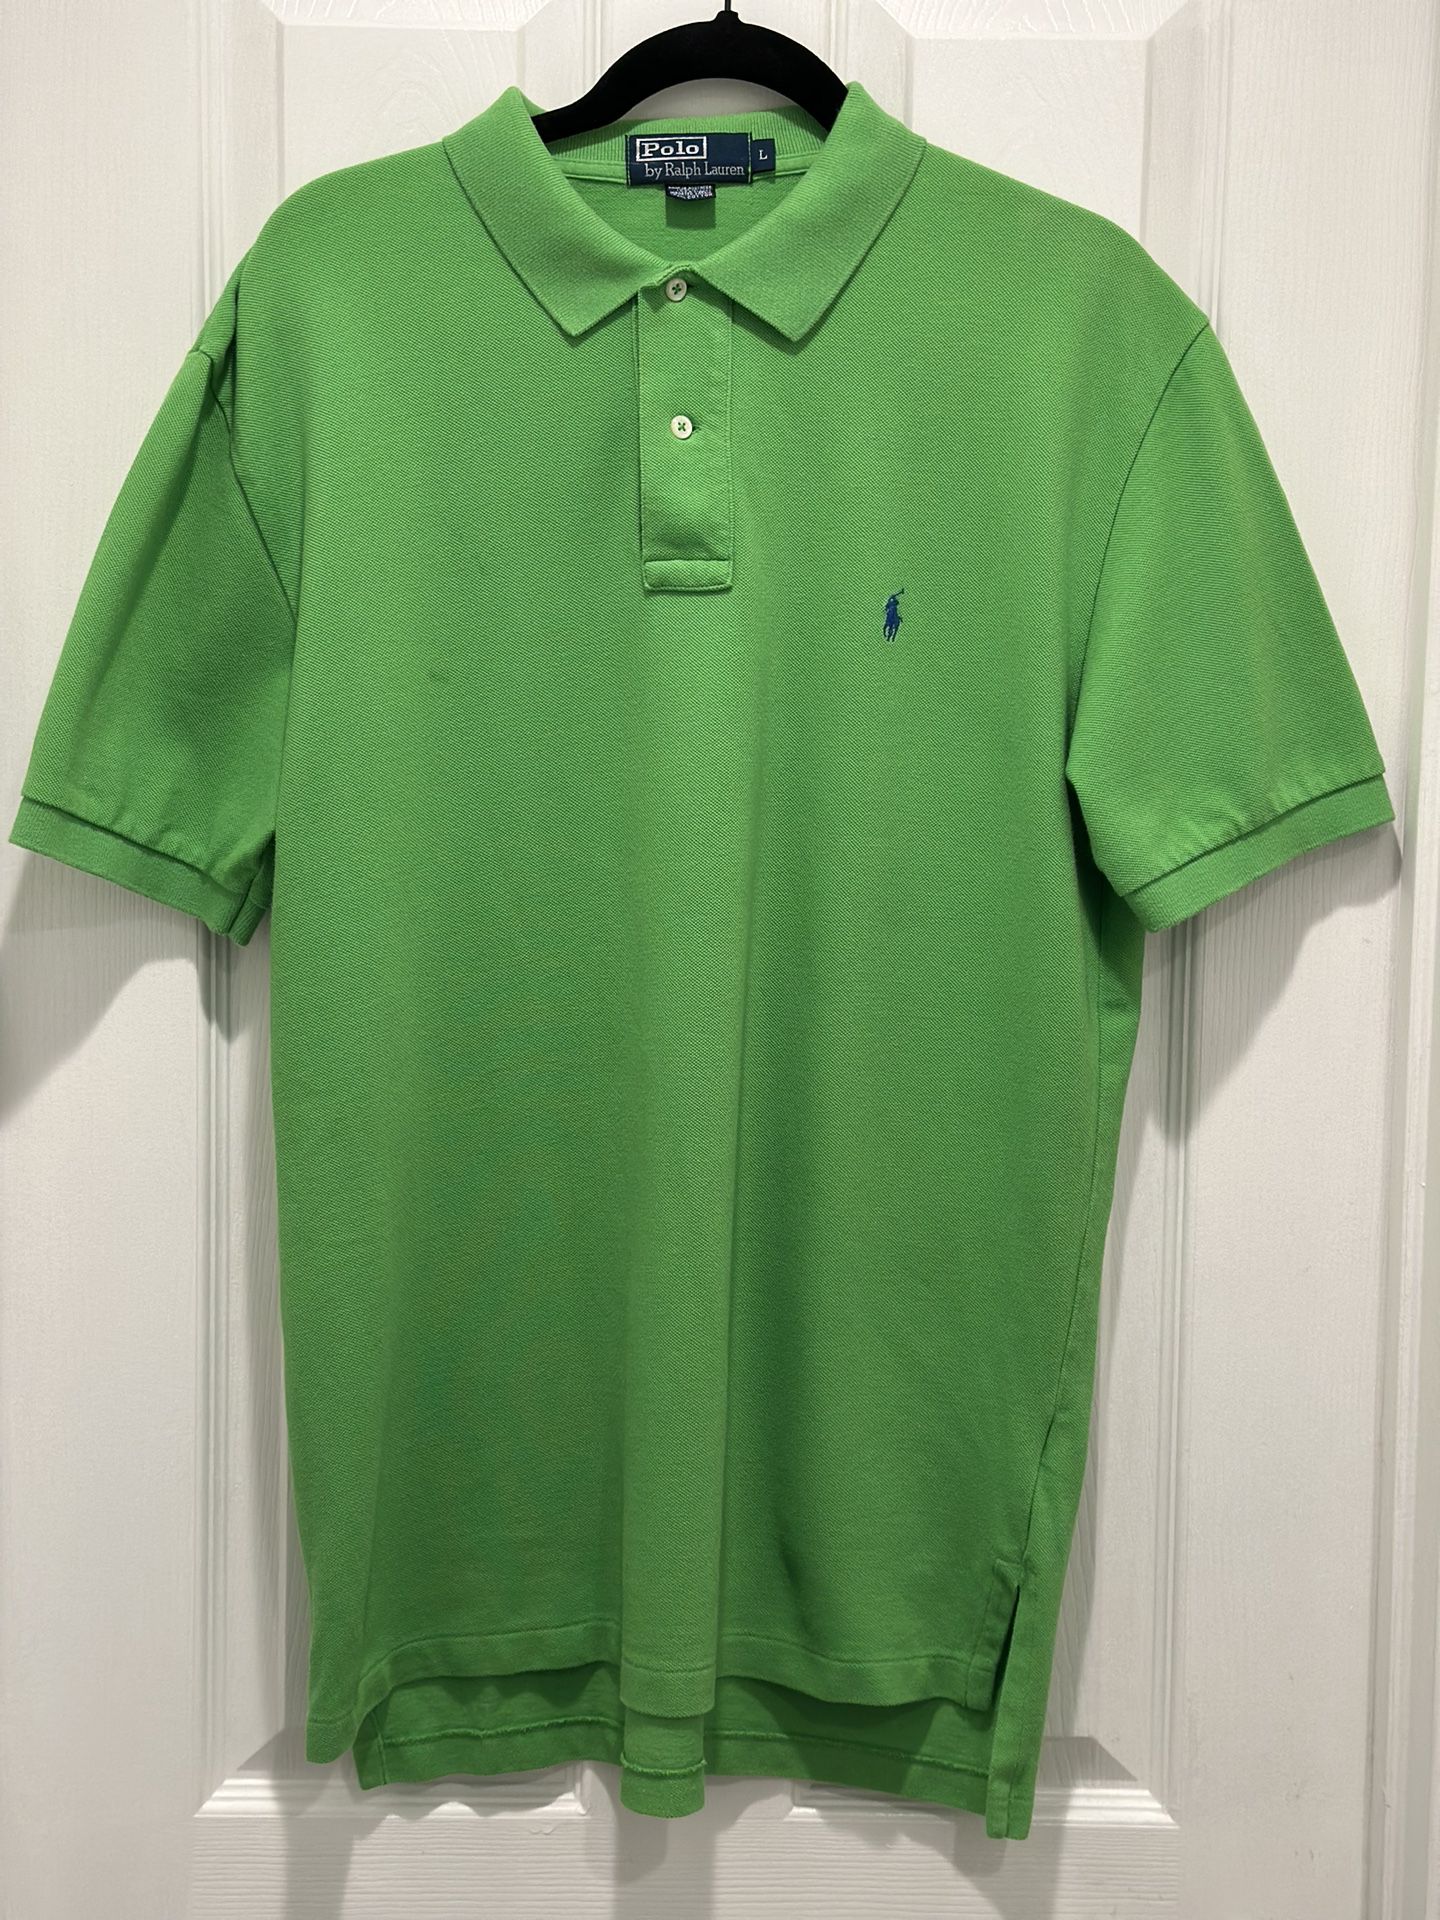 Polo By Ralph Lauren Golf Shirt Men's Sz L Green Cotton Classic Casual Logo Pony